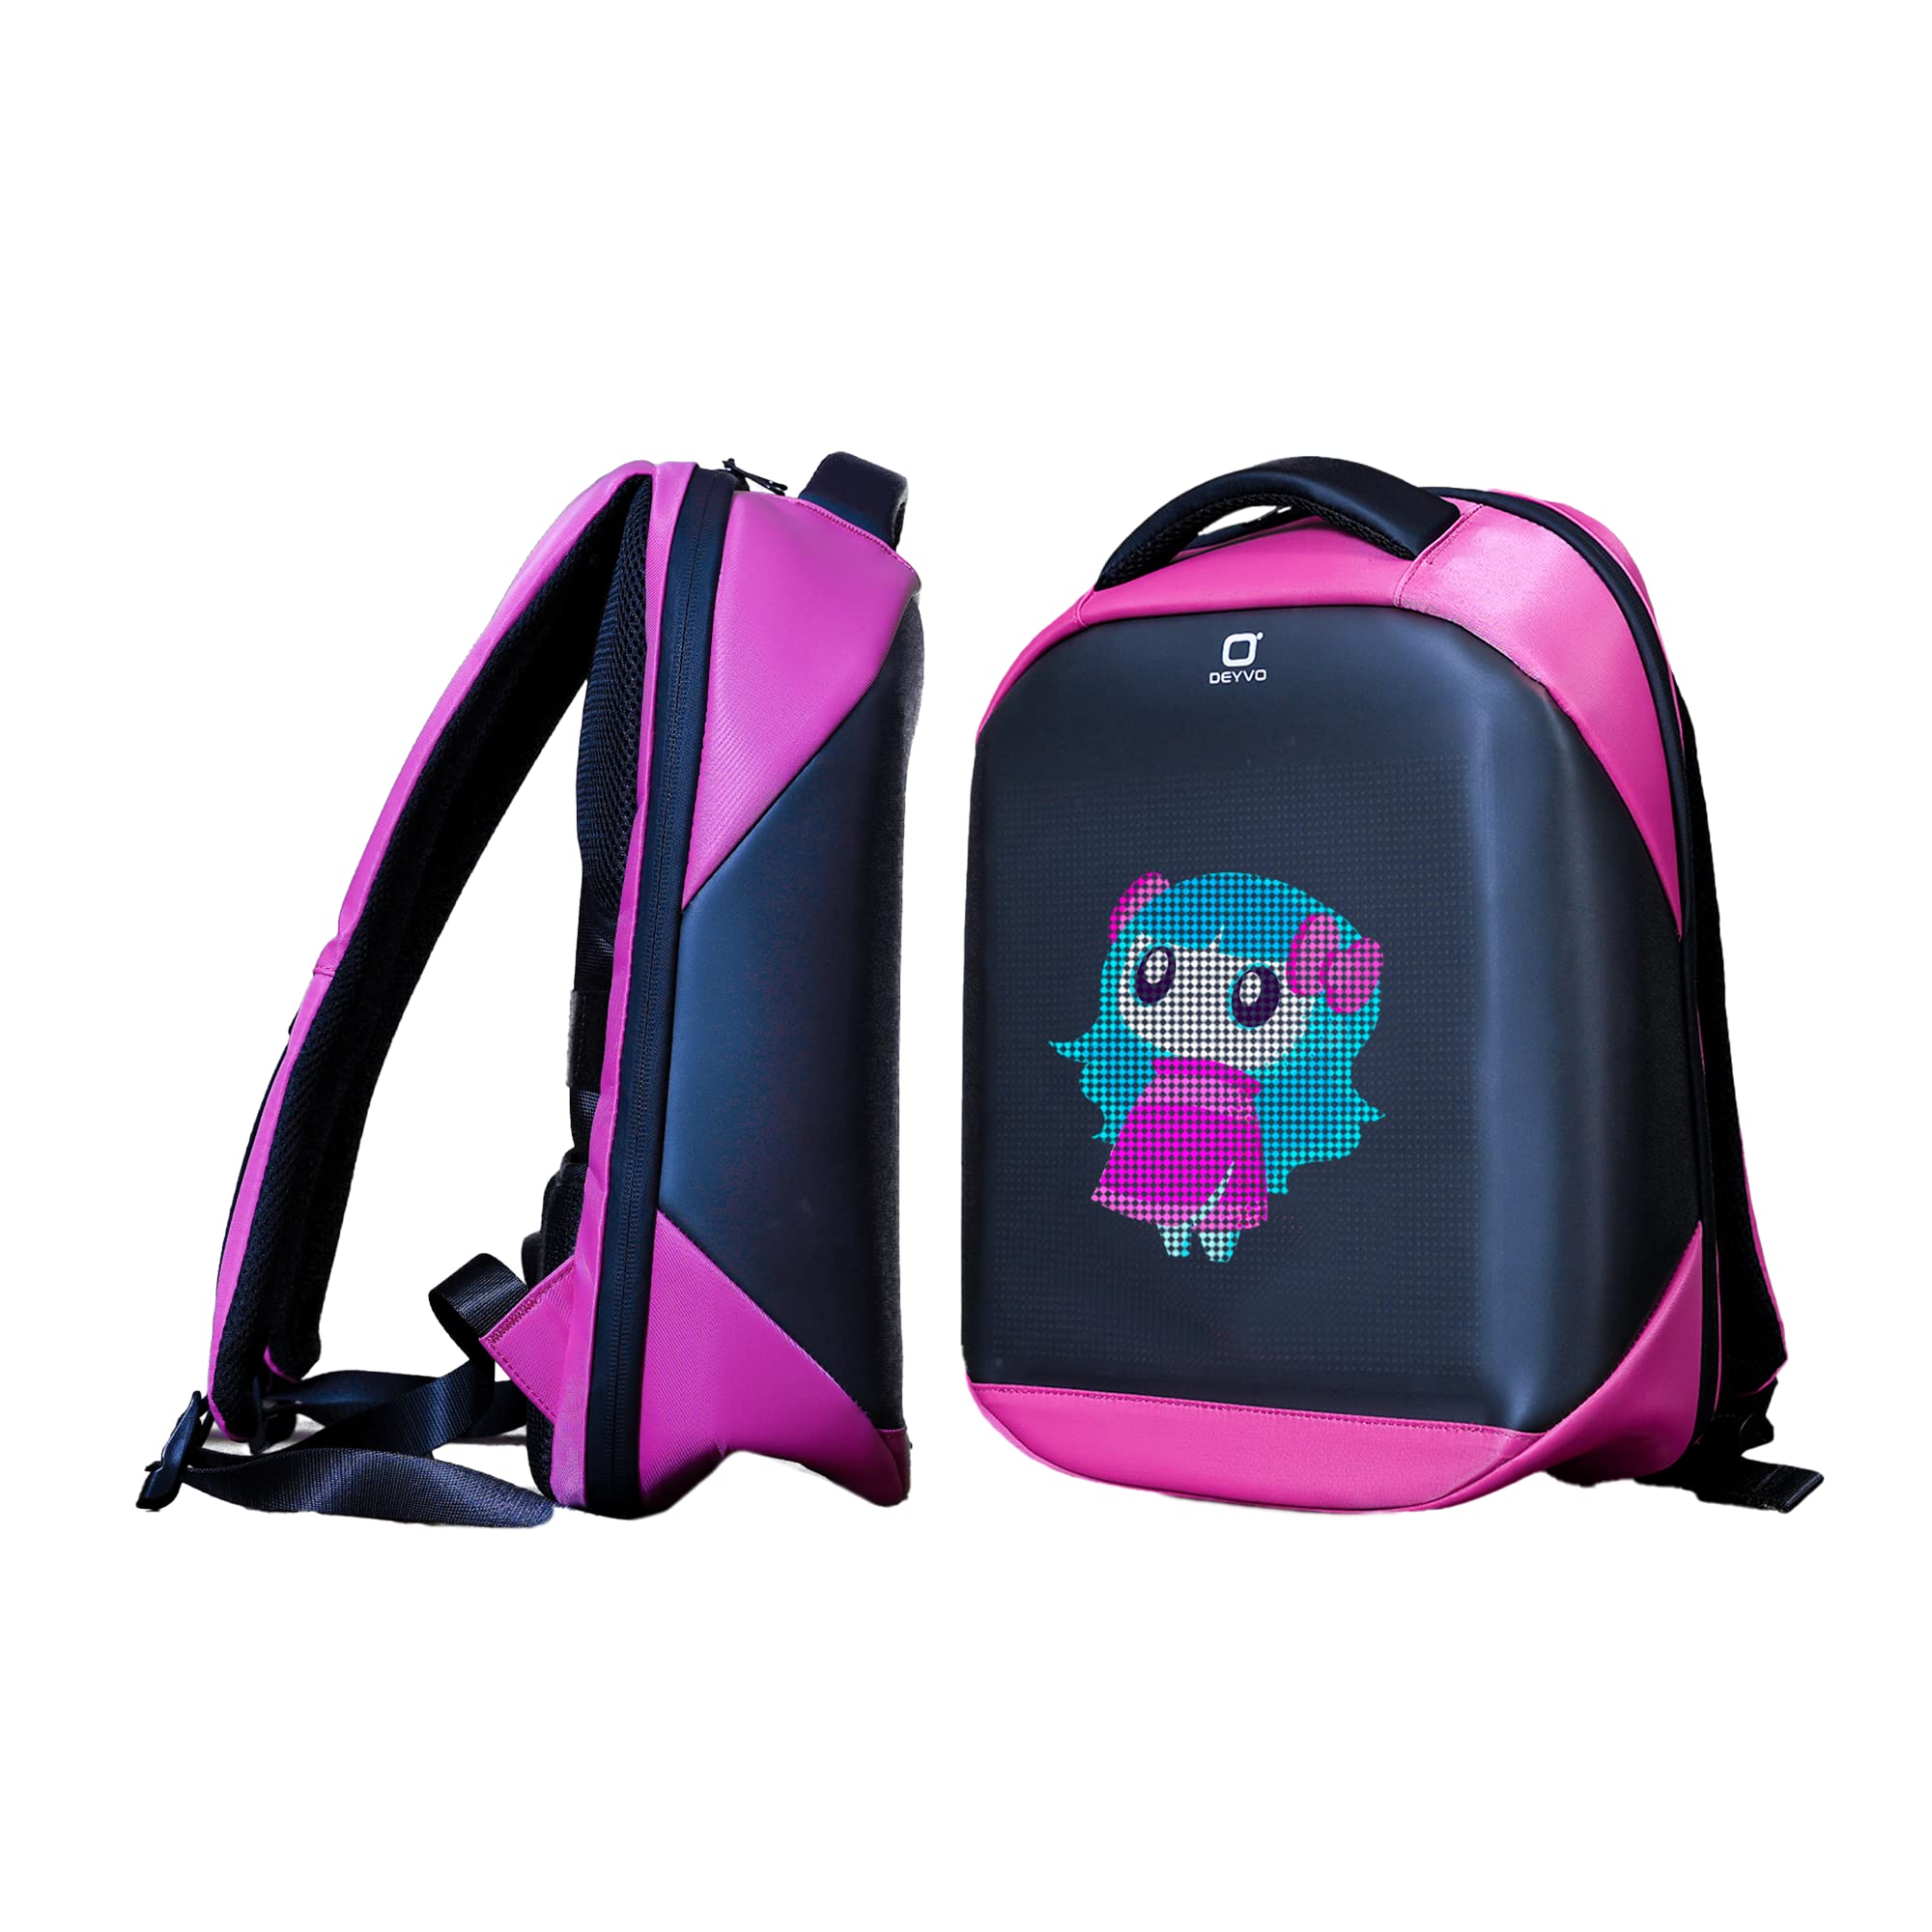 Amazon.com | Wrangler Smart Luggage Set with Cup Holder and USB Port,  Black, 3 Piece Set | Luggage Sets